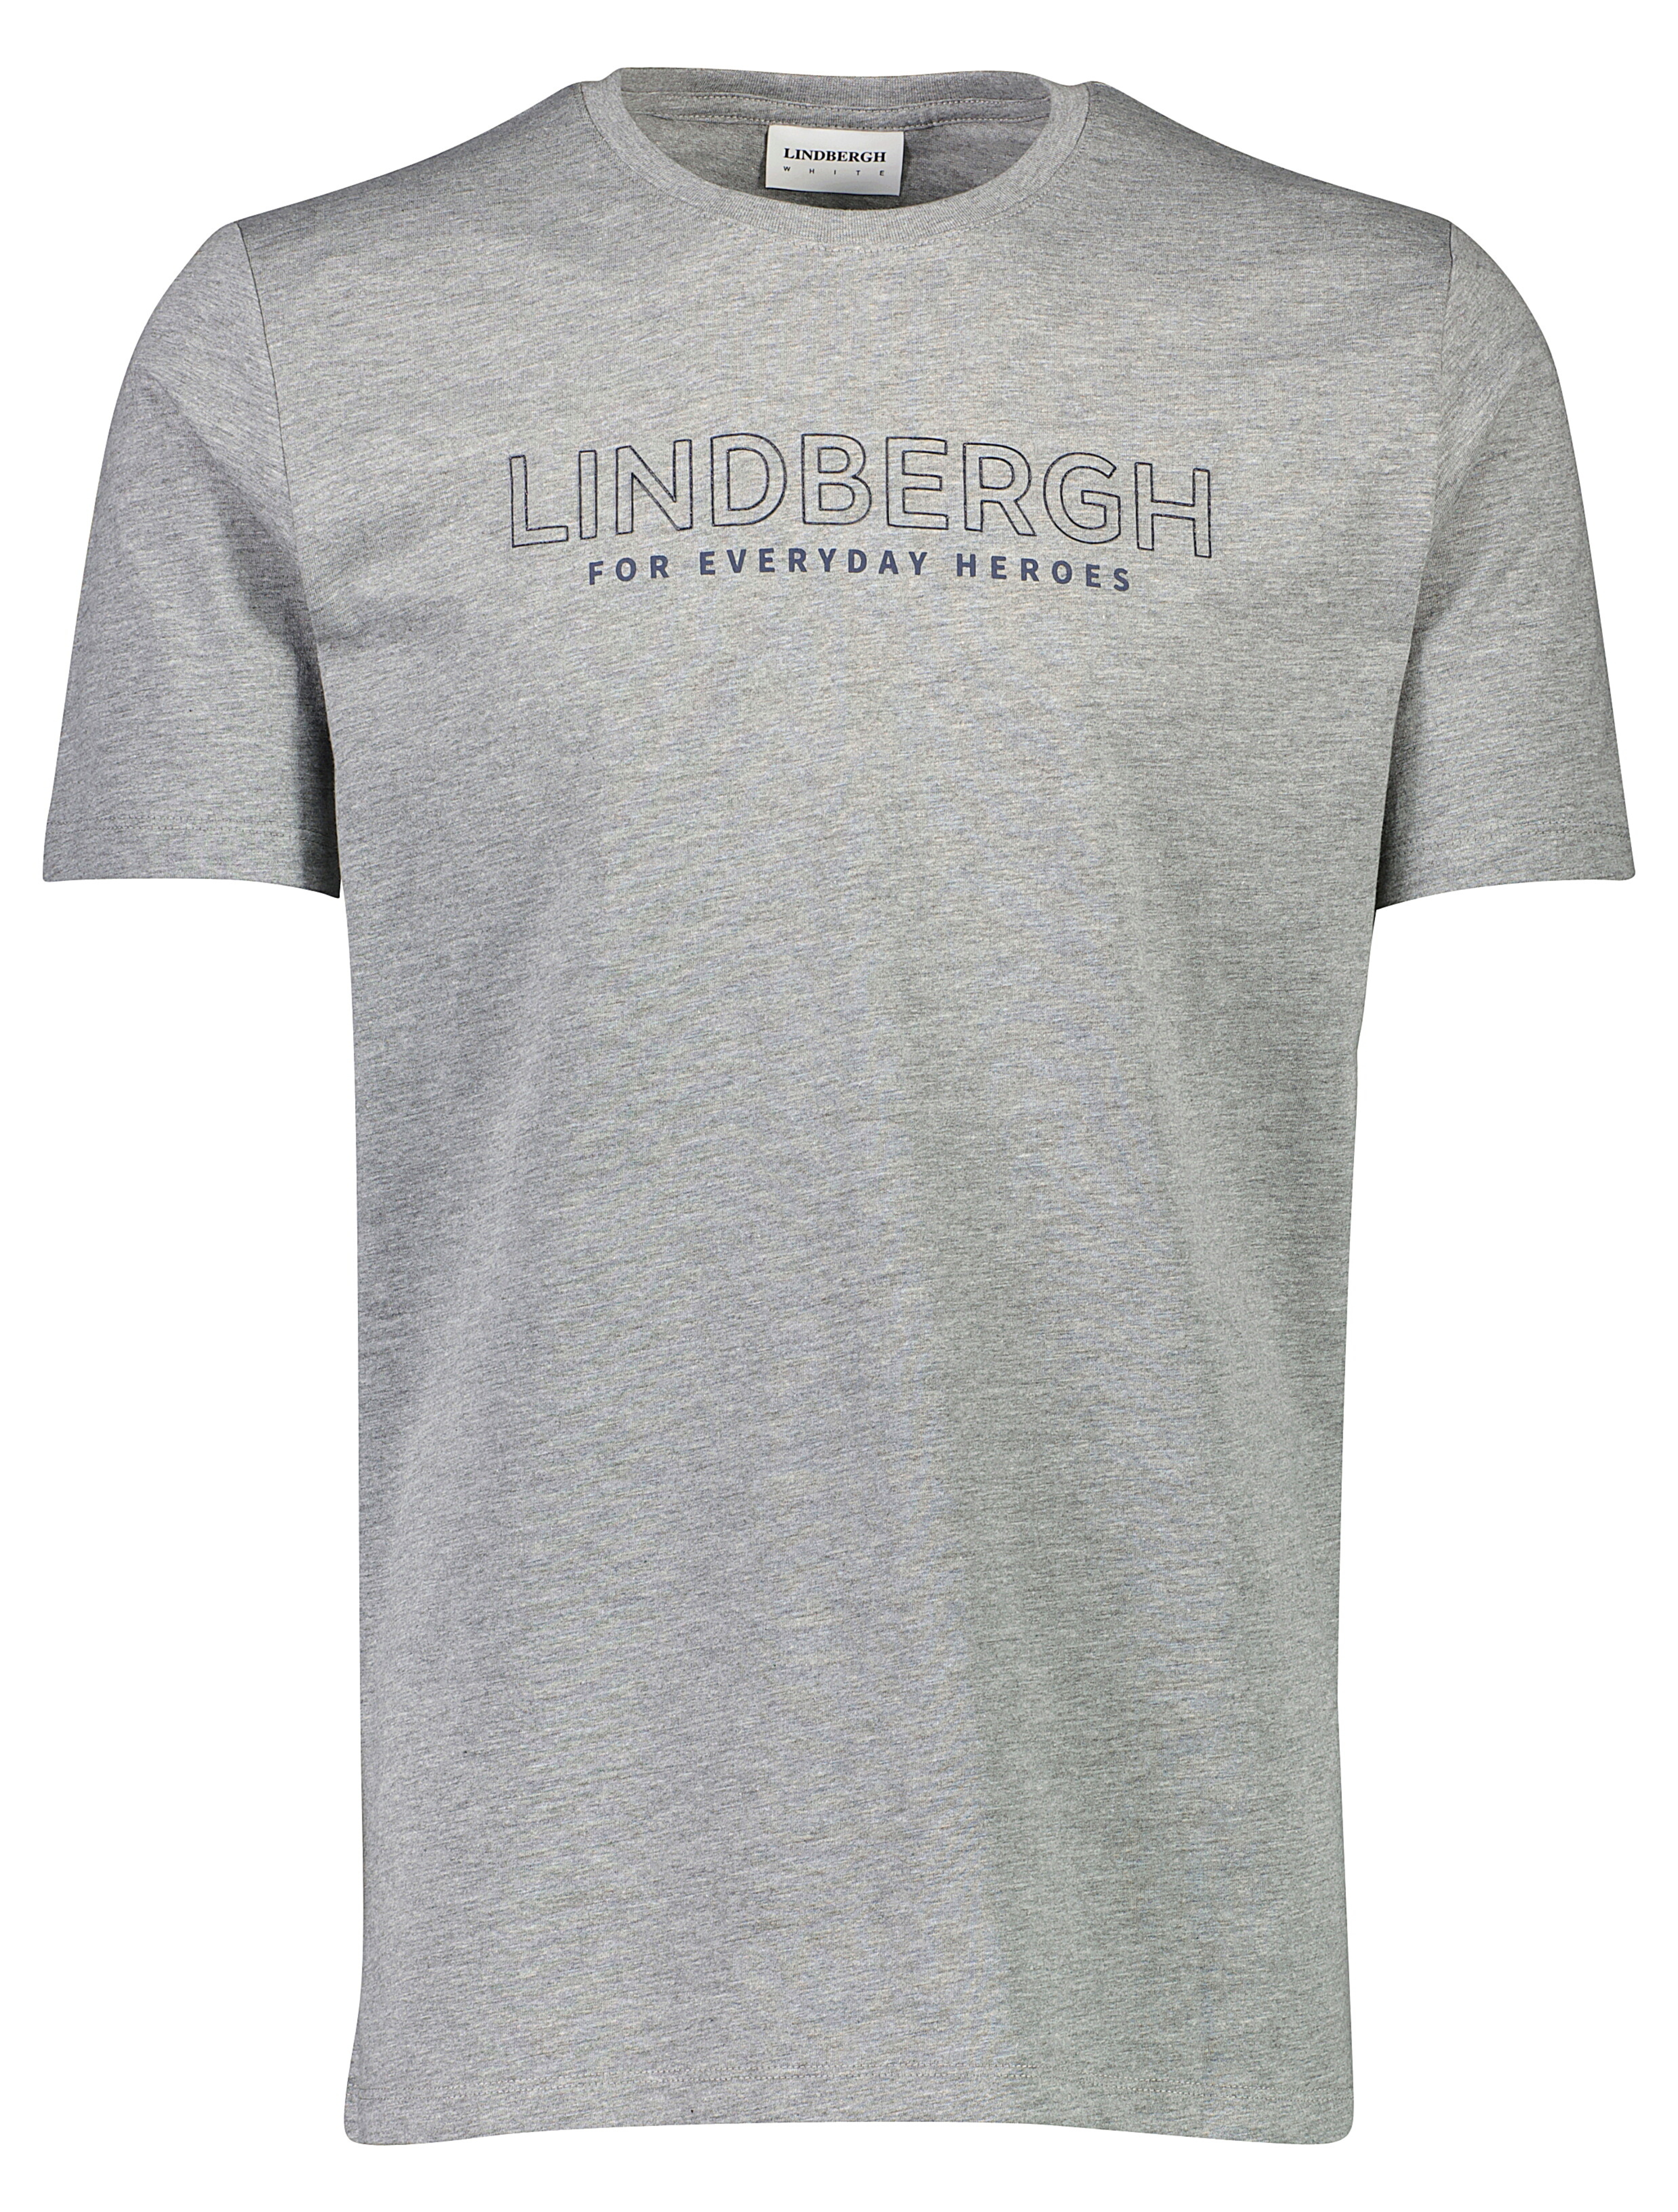 Lindbergh T-Shirt grau / grey mel